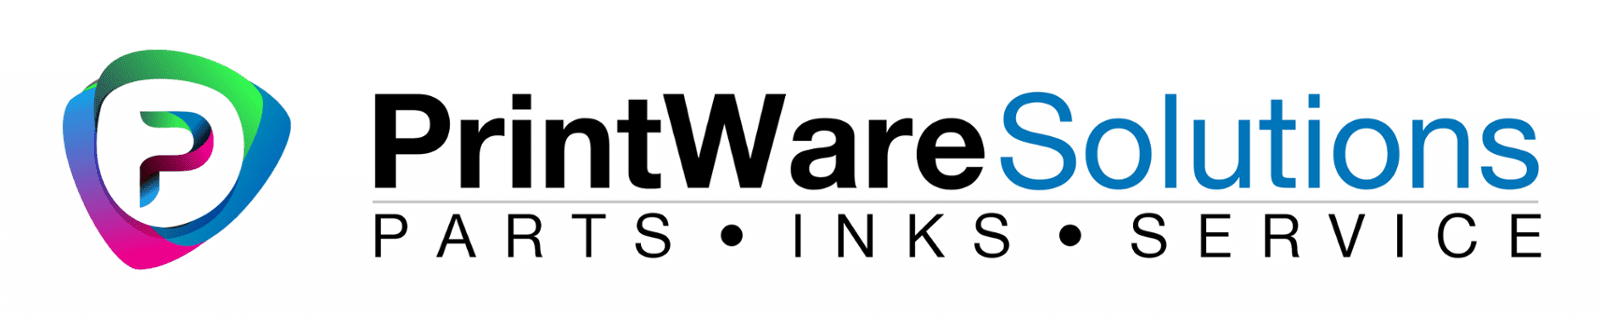 Printware Solutions